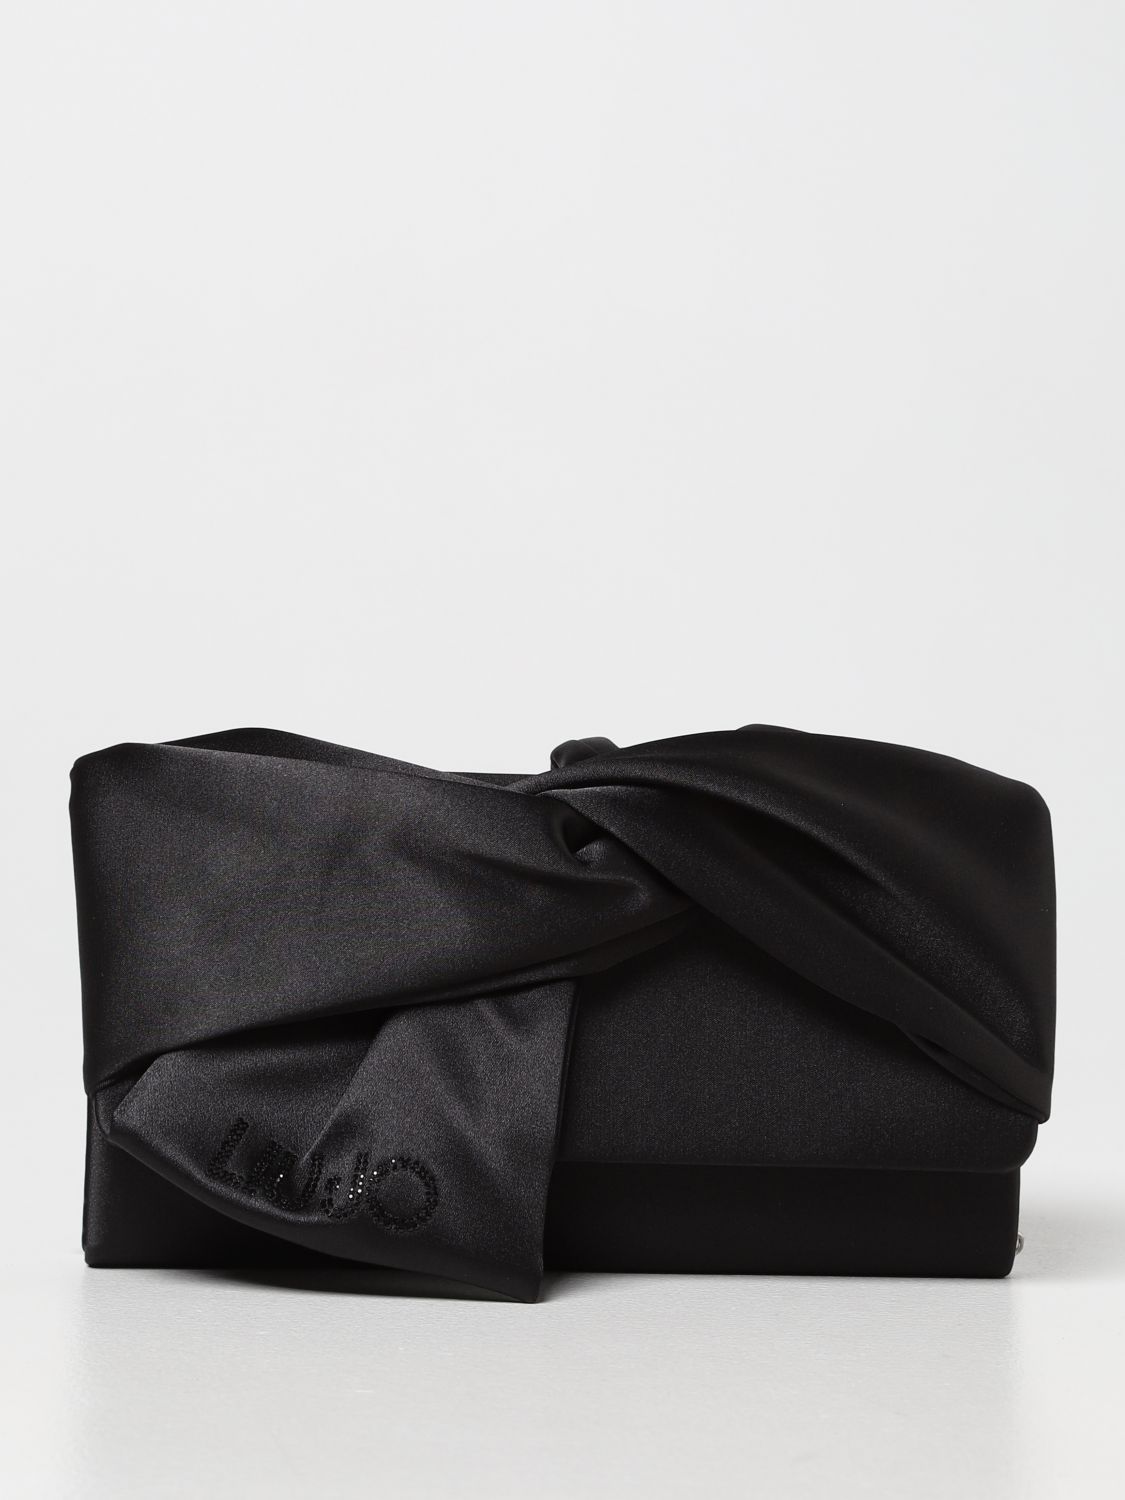 Liu •jo Fabric Bag In Black